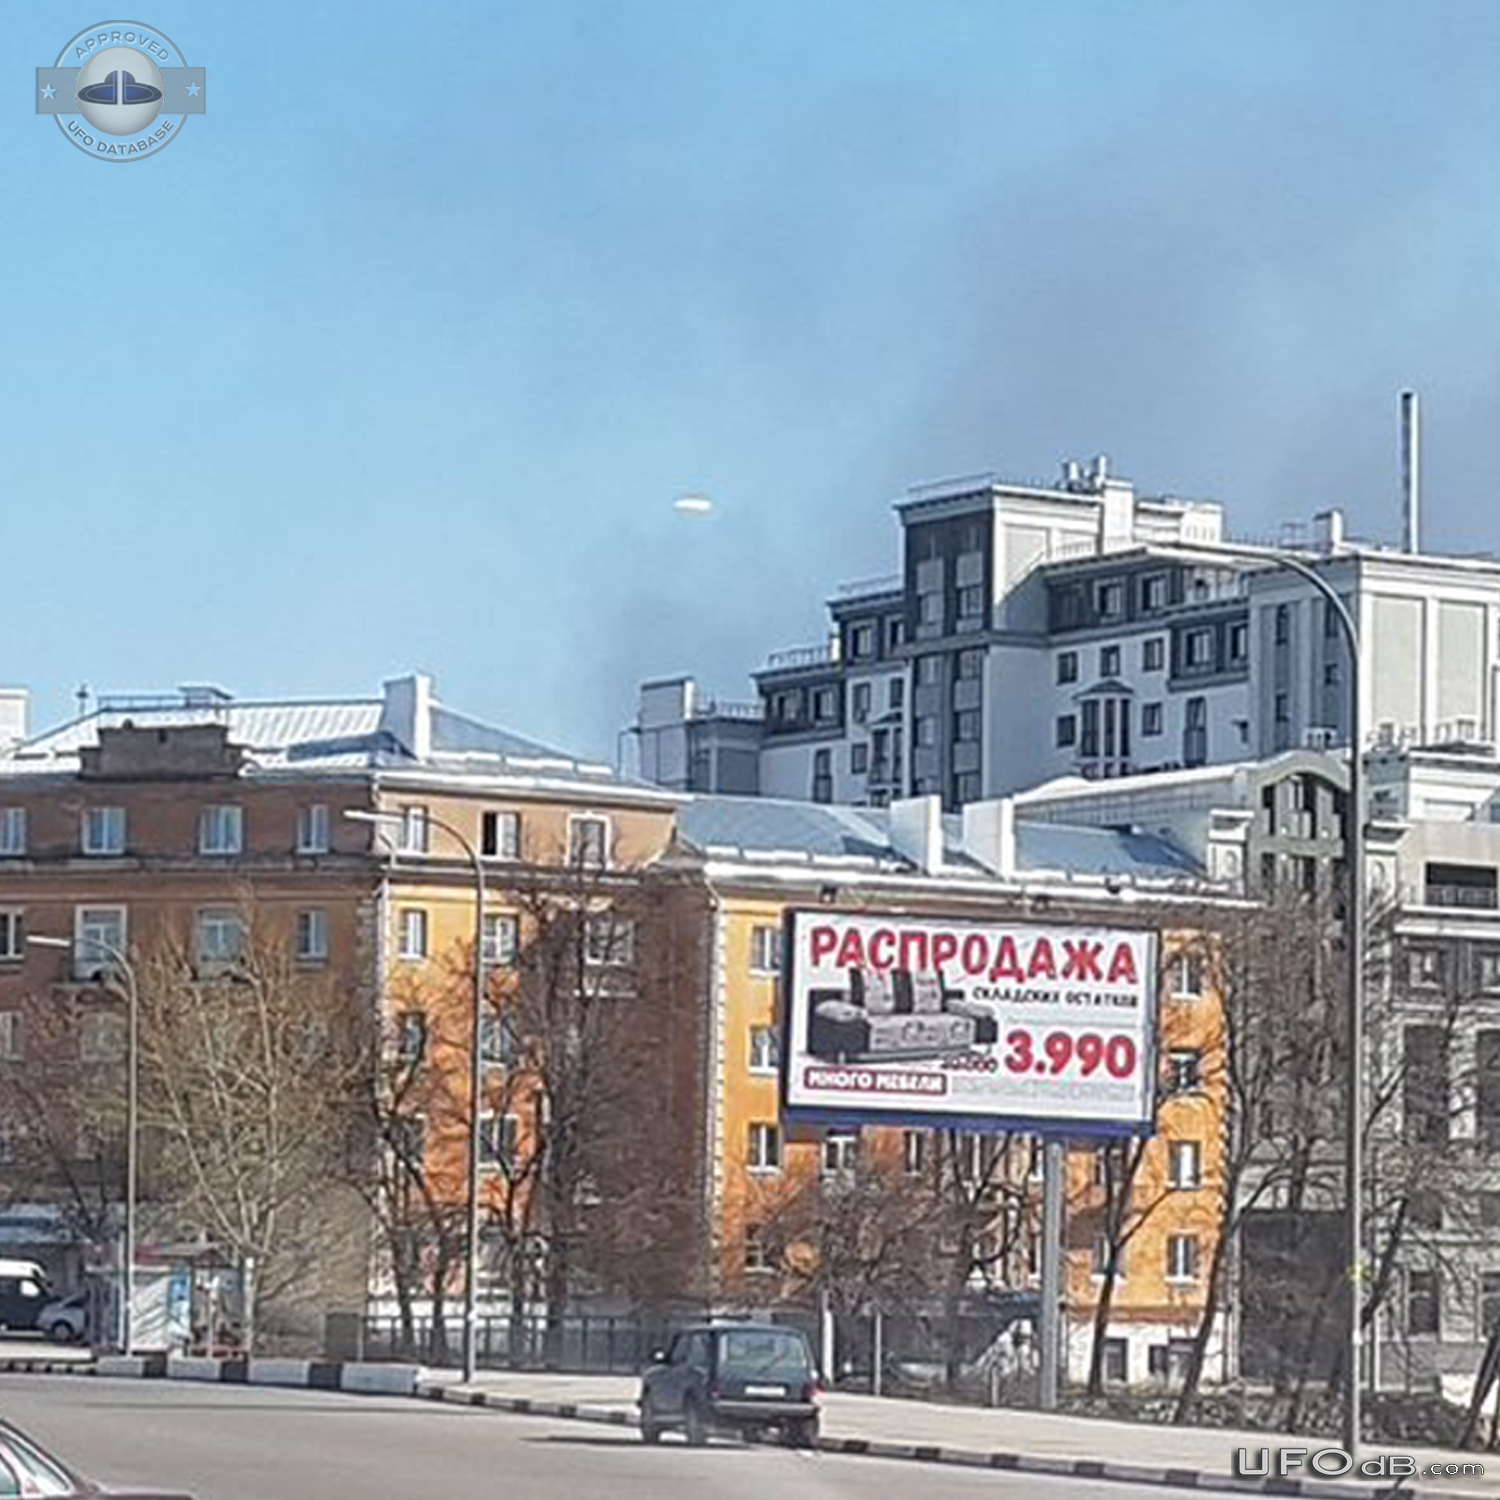 Photo of smoke on the horizon capture UFO Saucer - Ryazan Russia 2017 UFO Picture #804-3